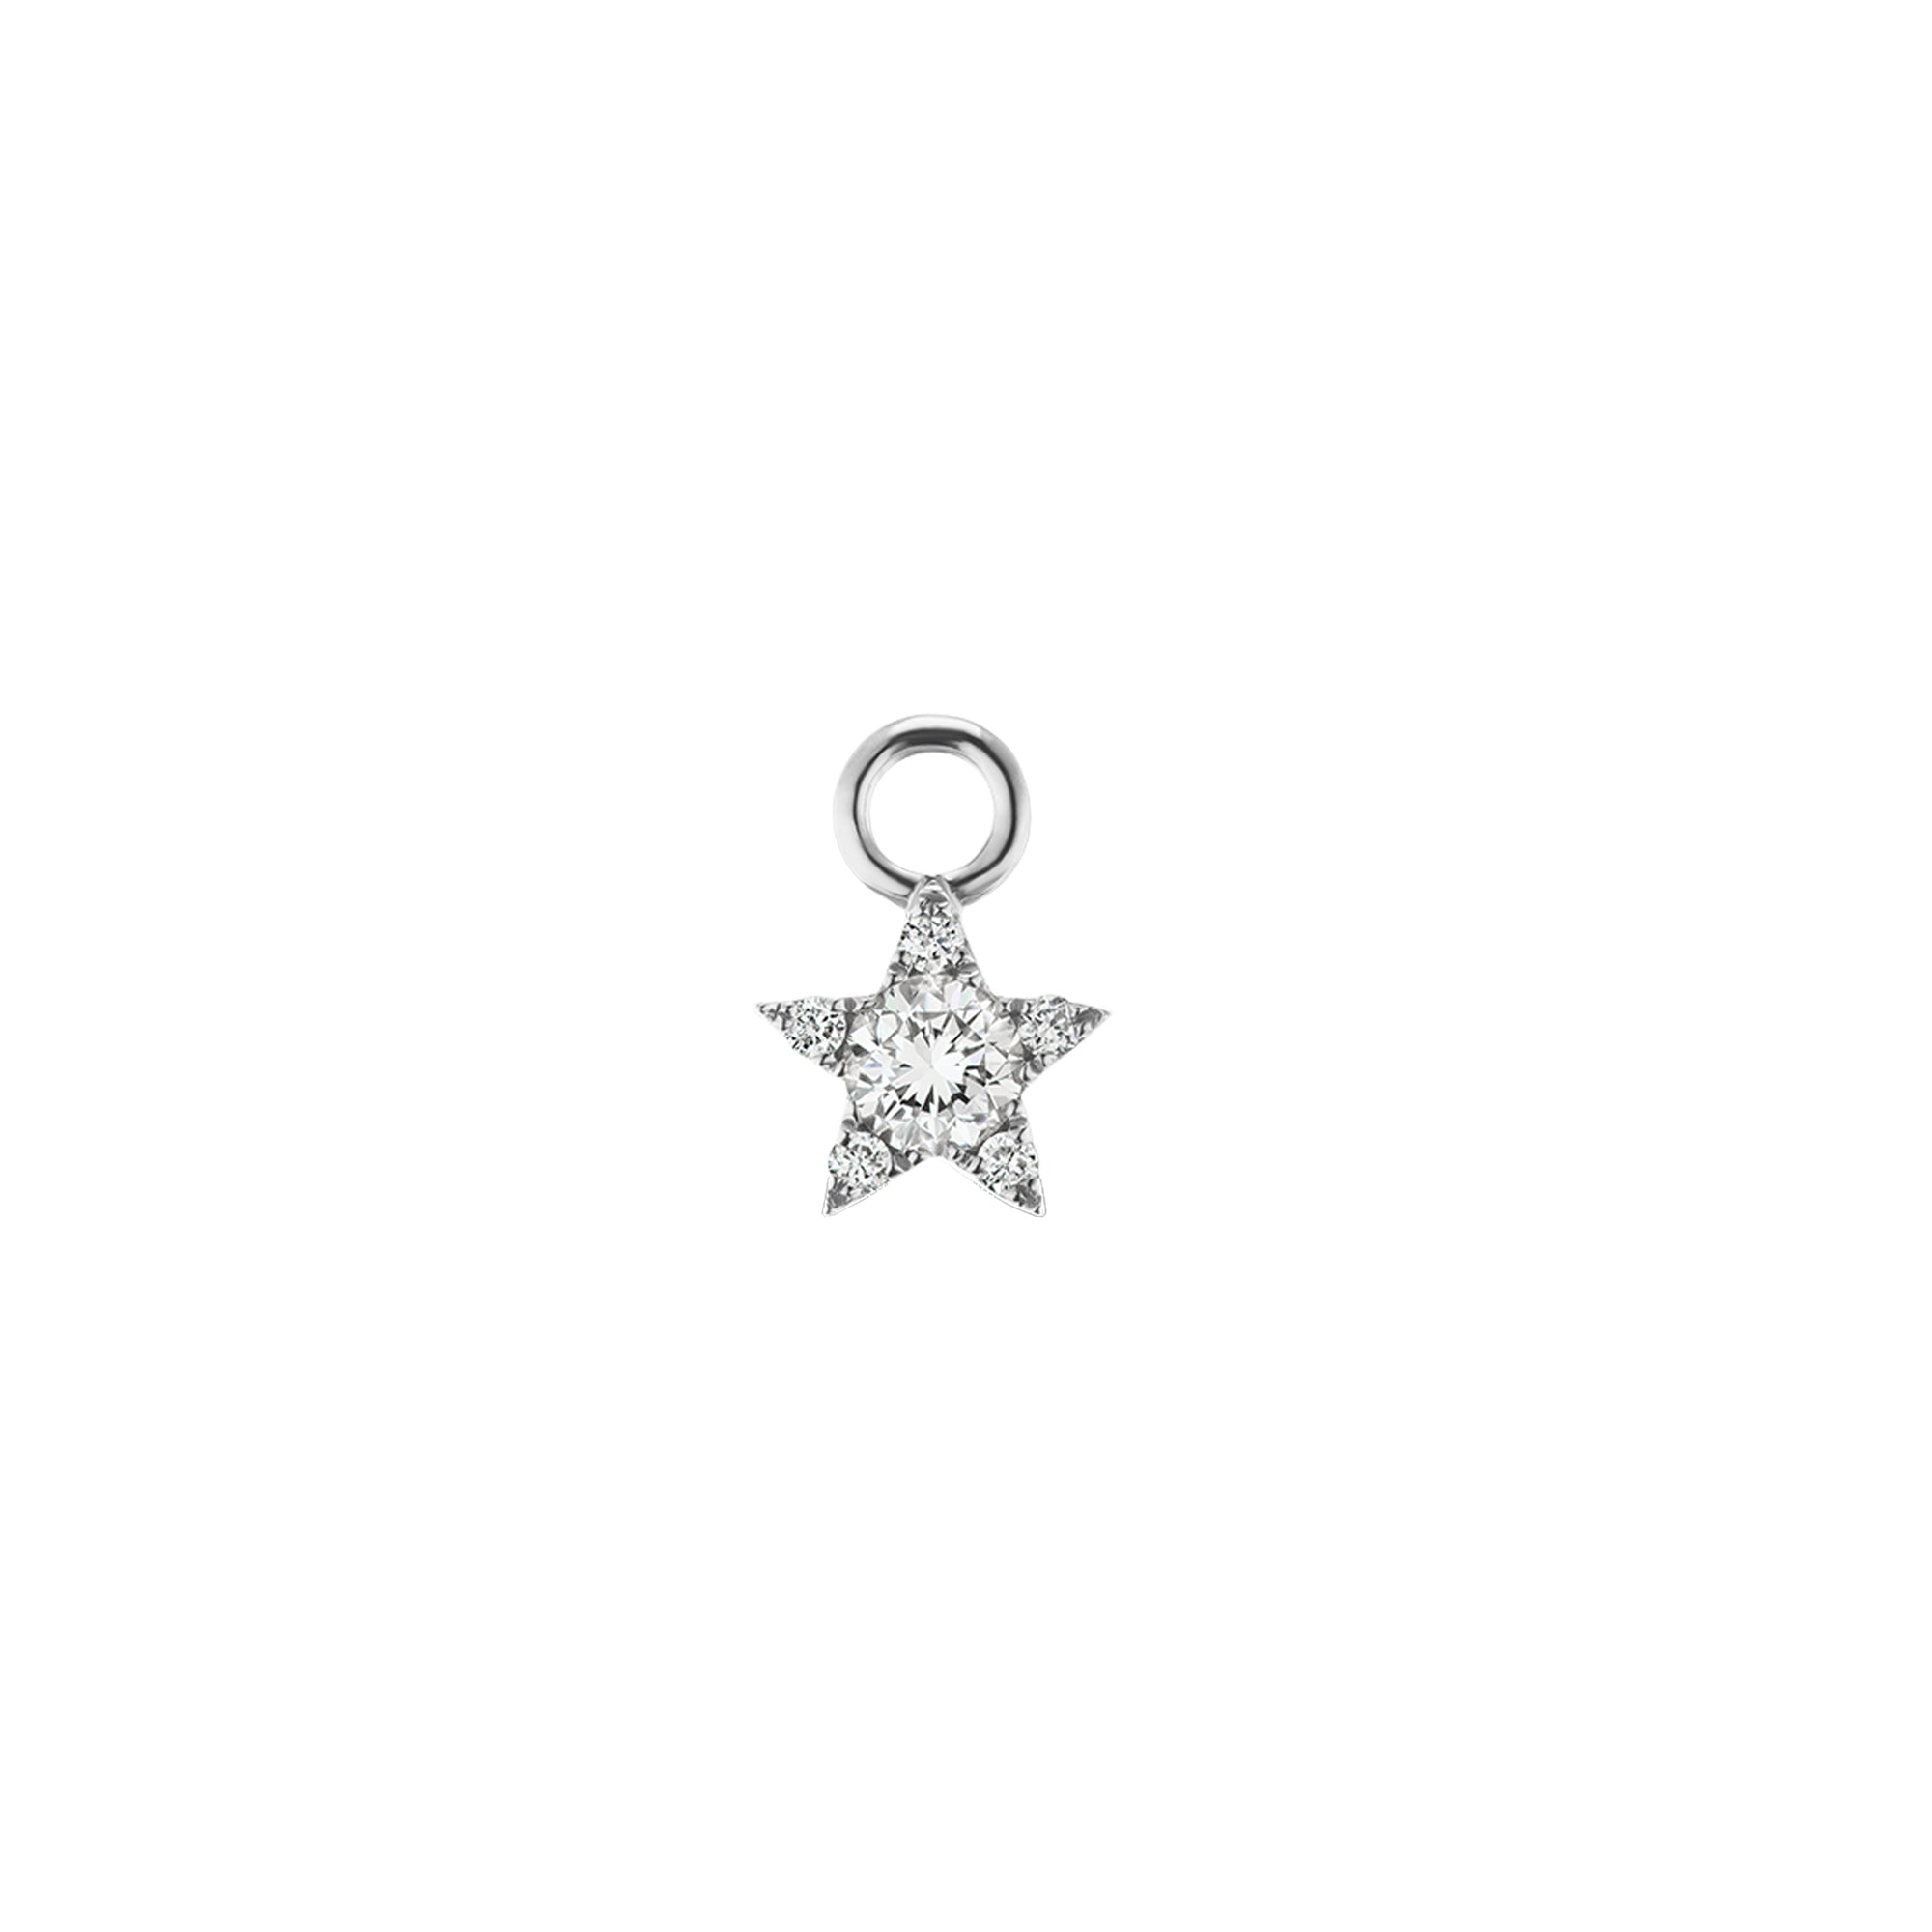 4.5mm White Gold Diamond Star Charm